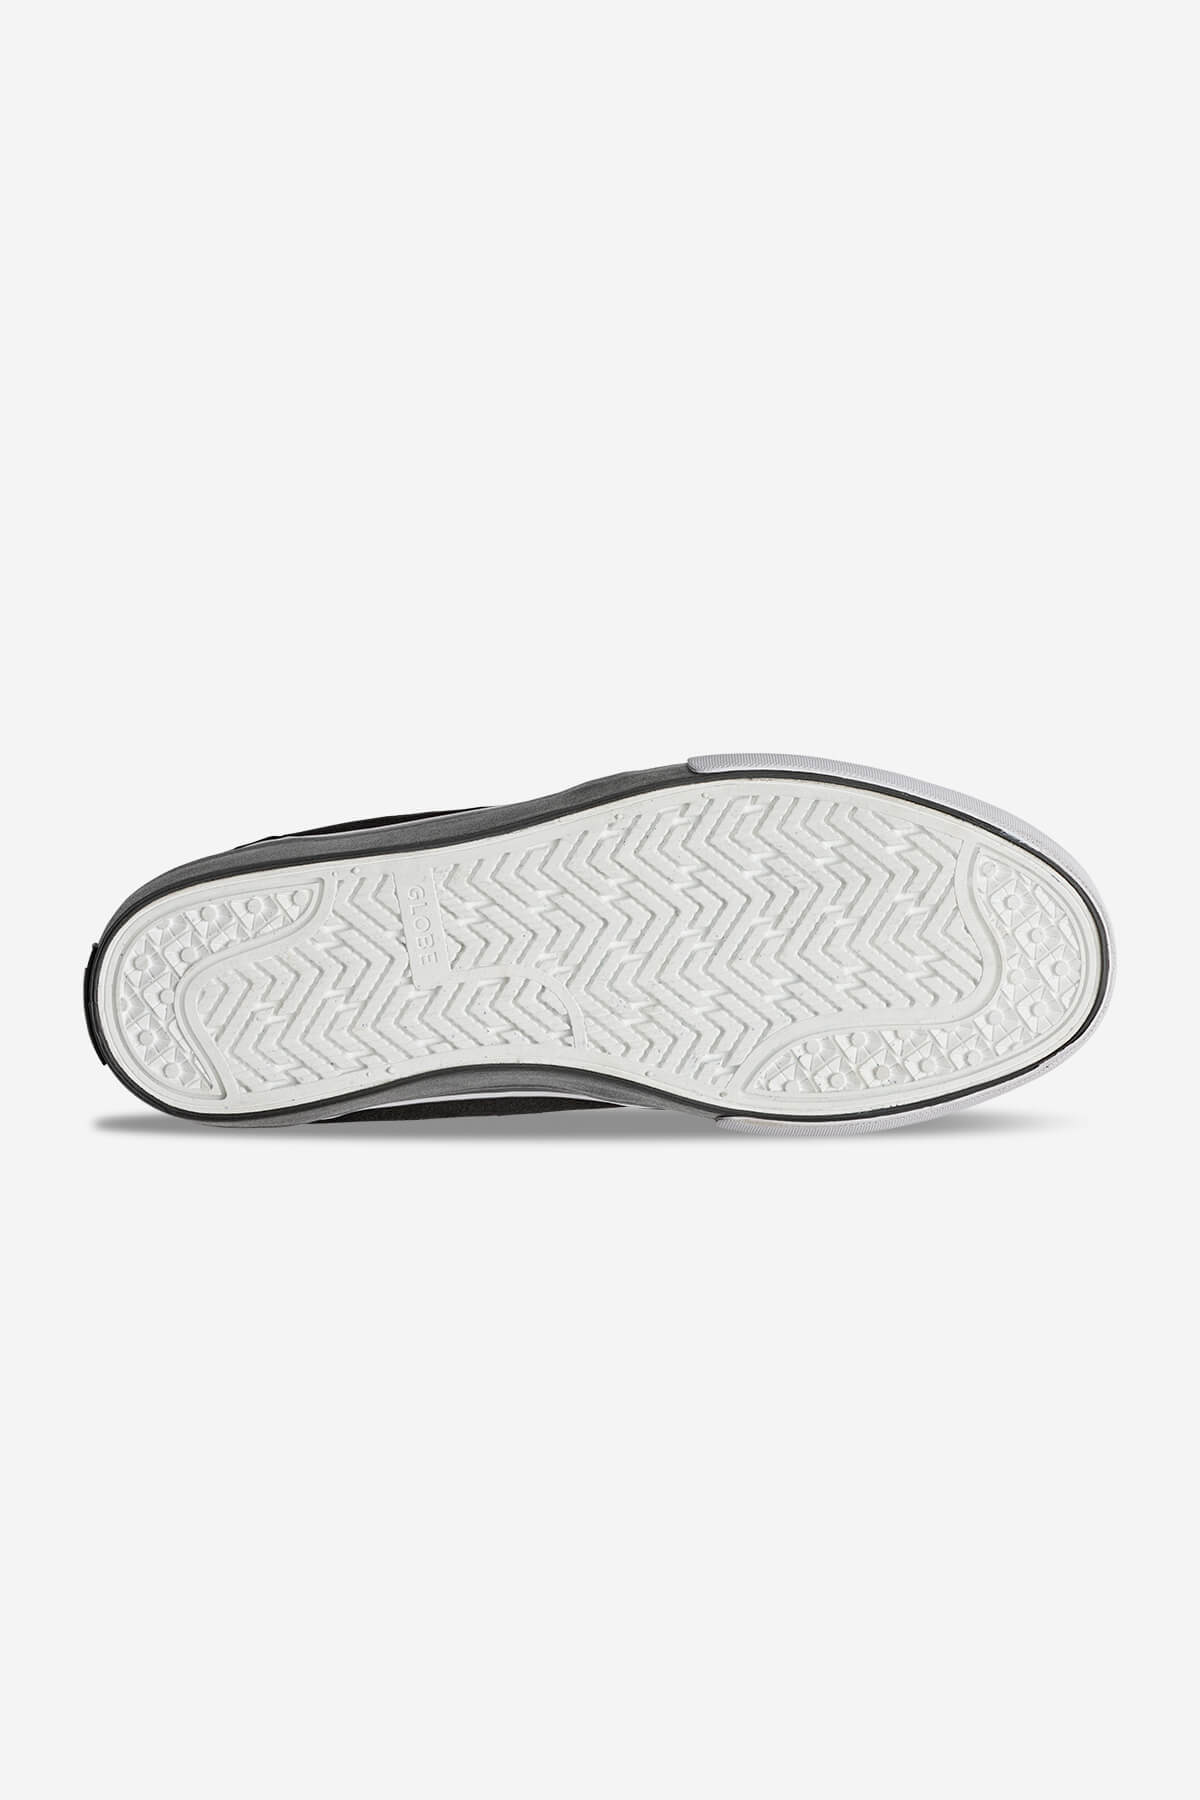 mahalo zwart white skateboard  schoenen